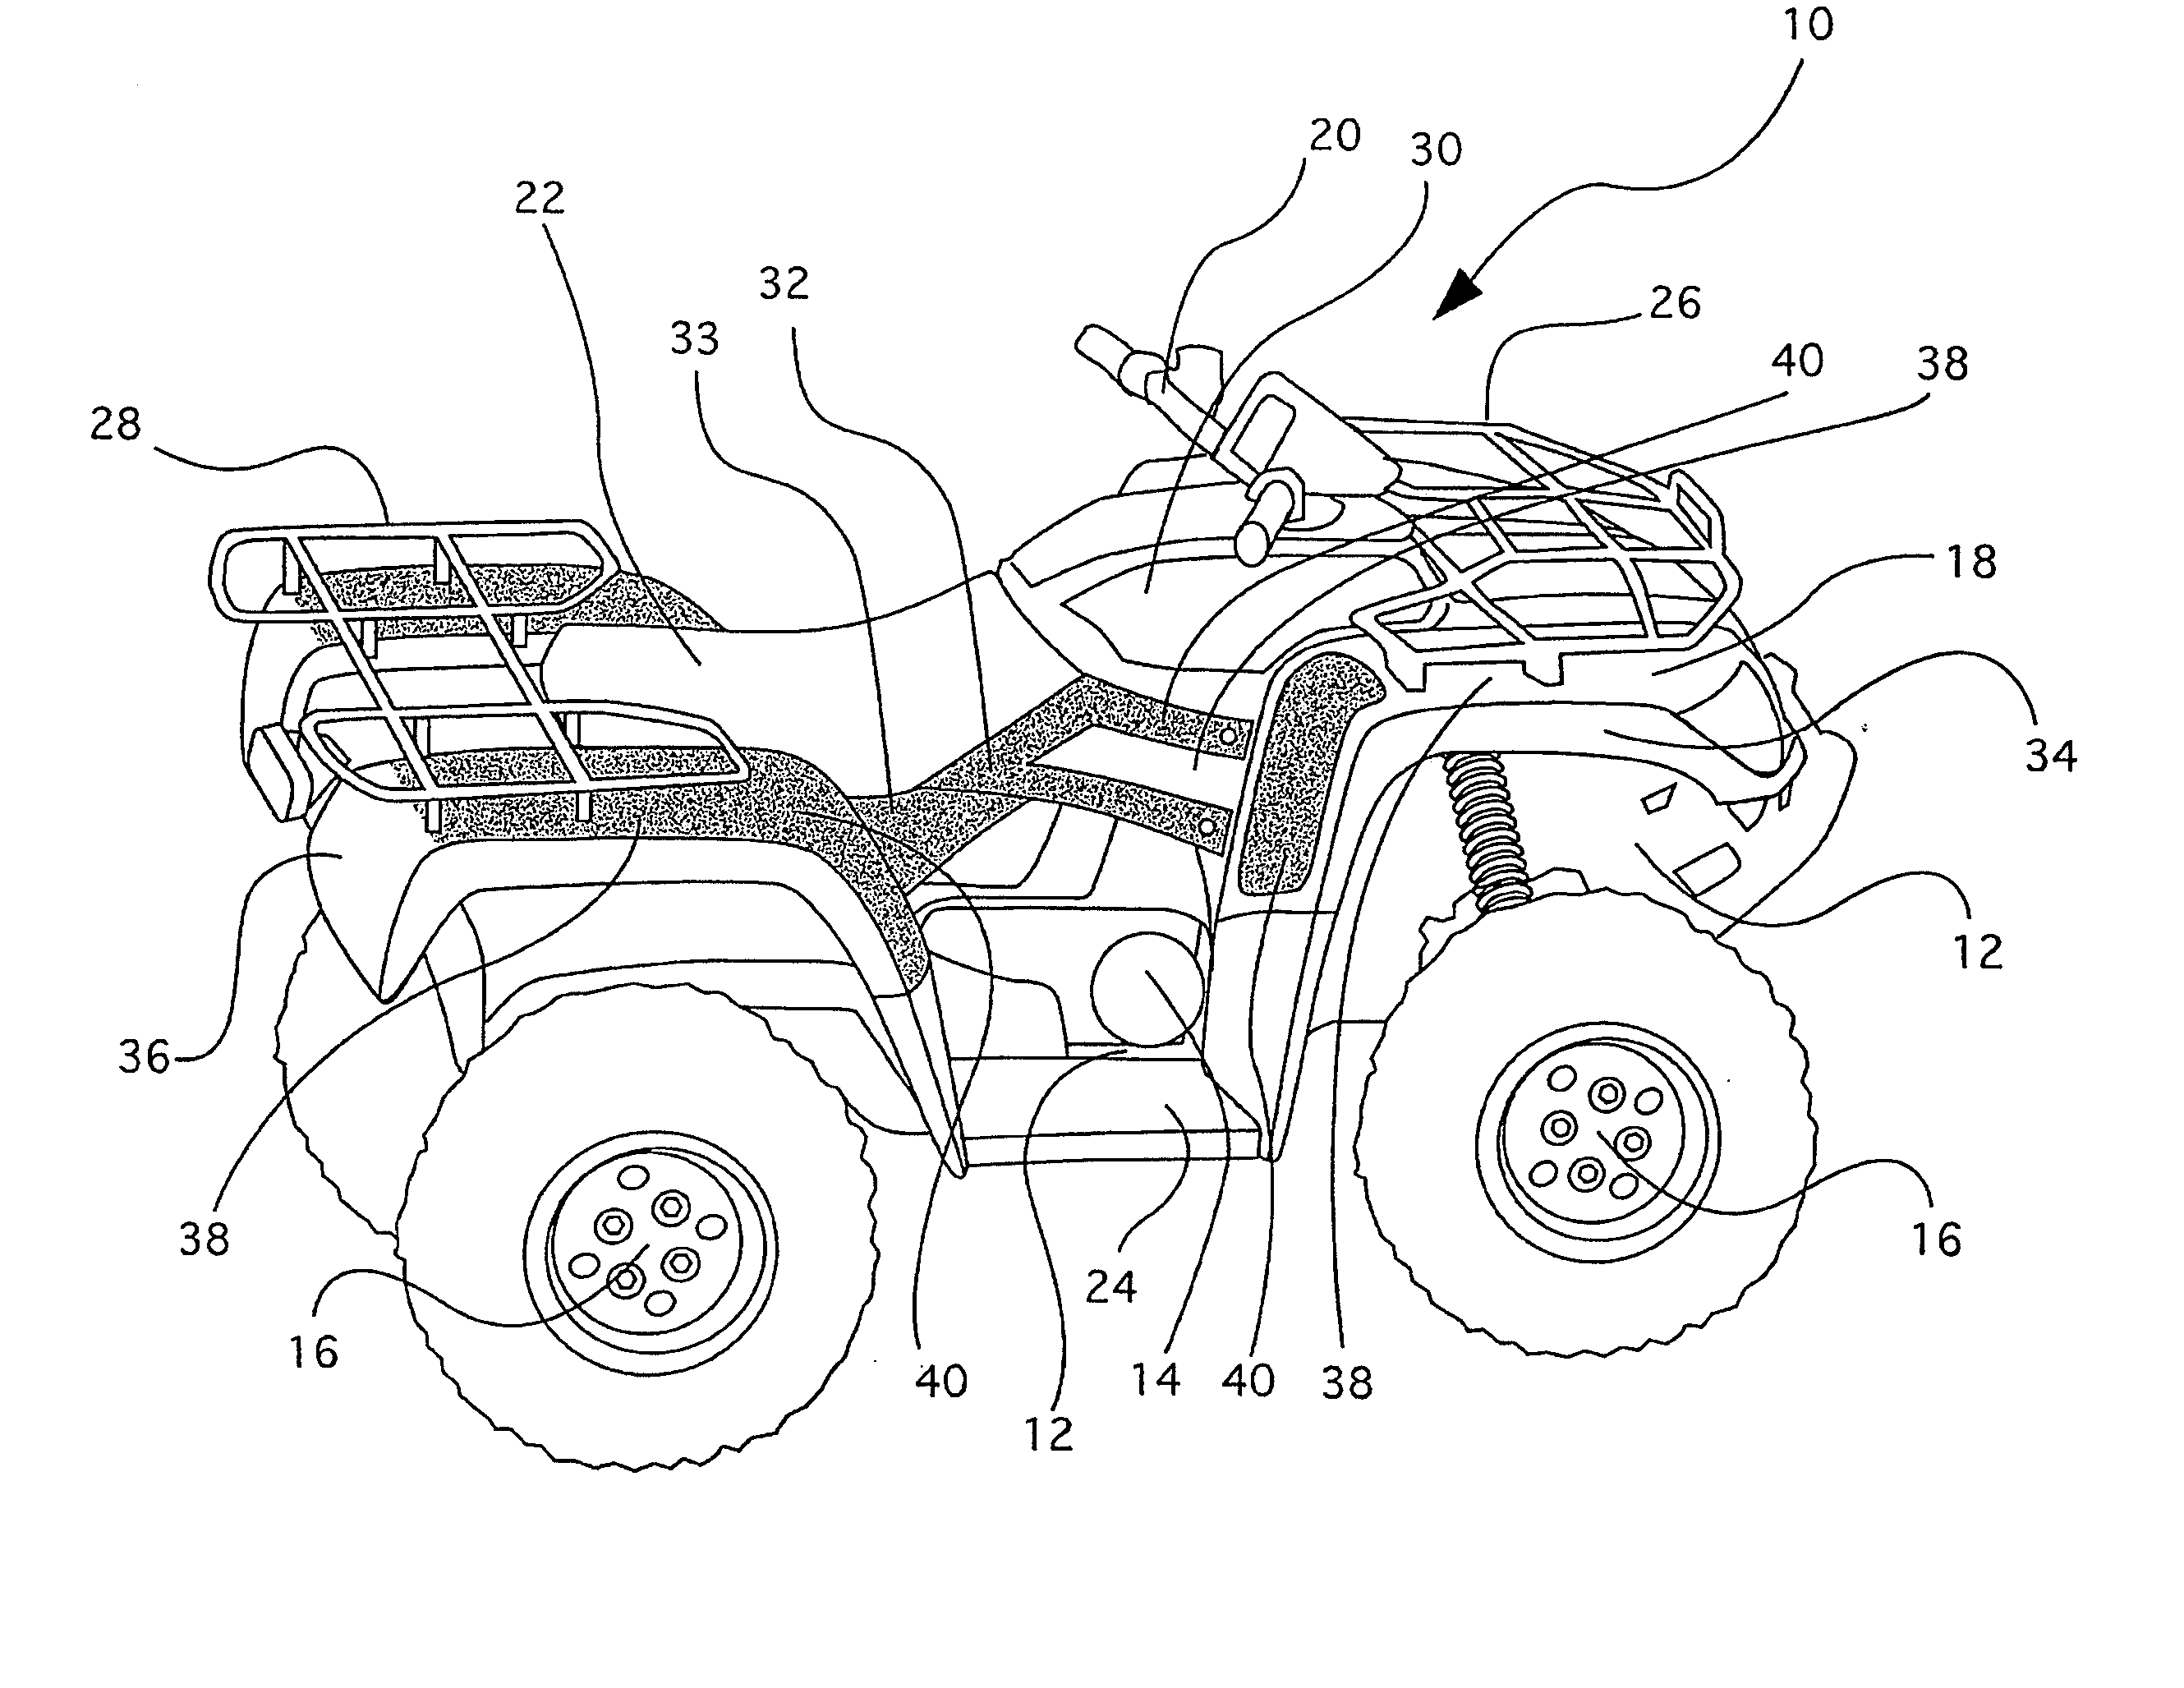 Textured all-terrain vehicle fenders